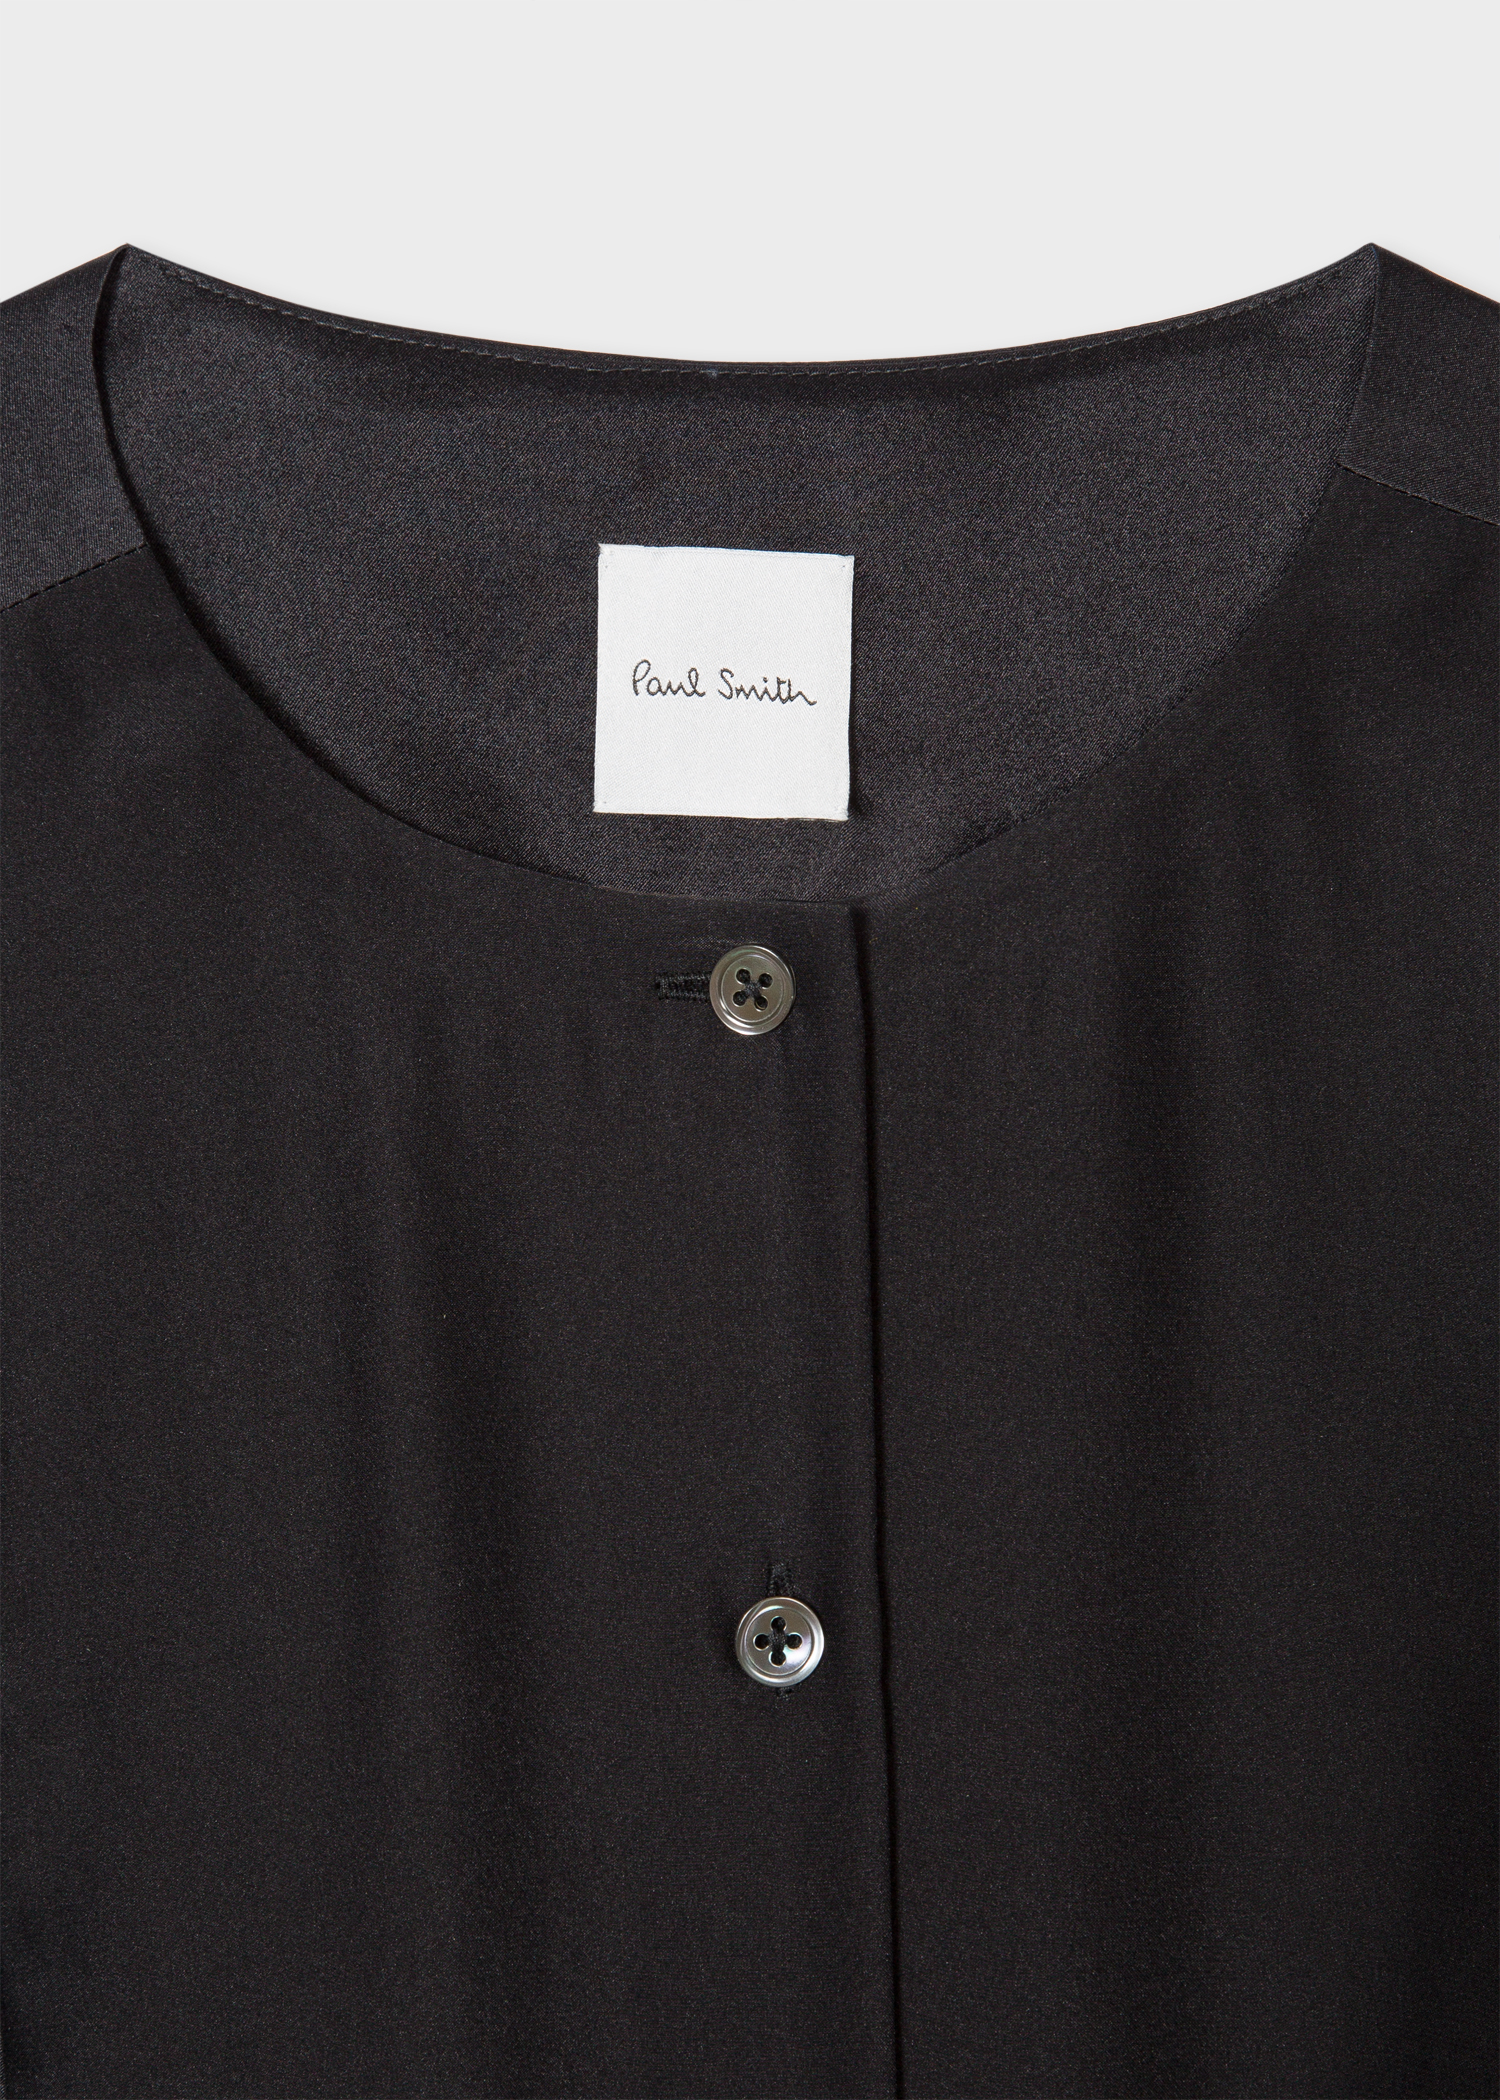 Collar view - Women's Black Tuxedo Satin Silk Shirt Dress With Bib And Belt Detail Paul Smith